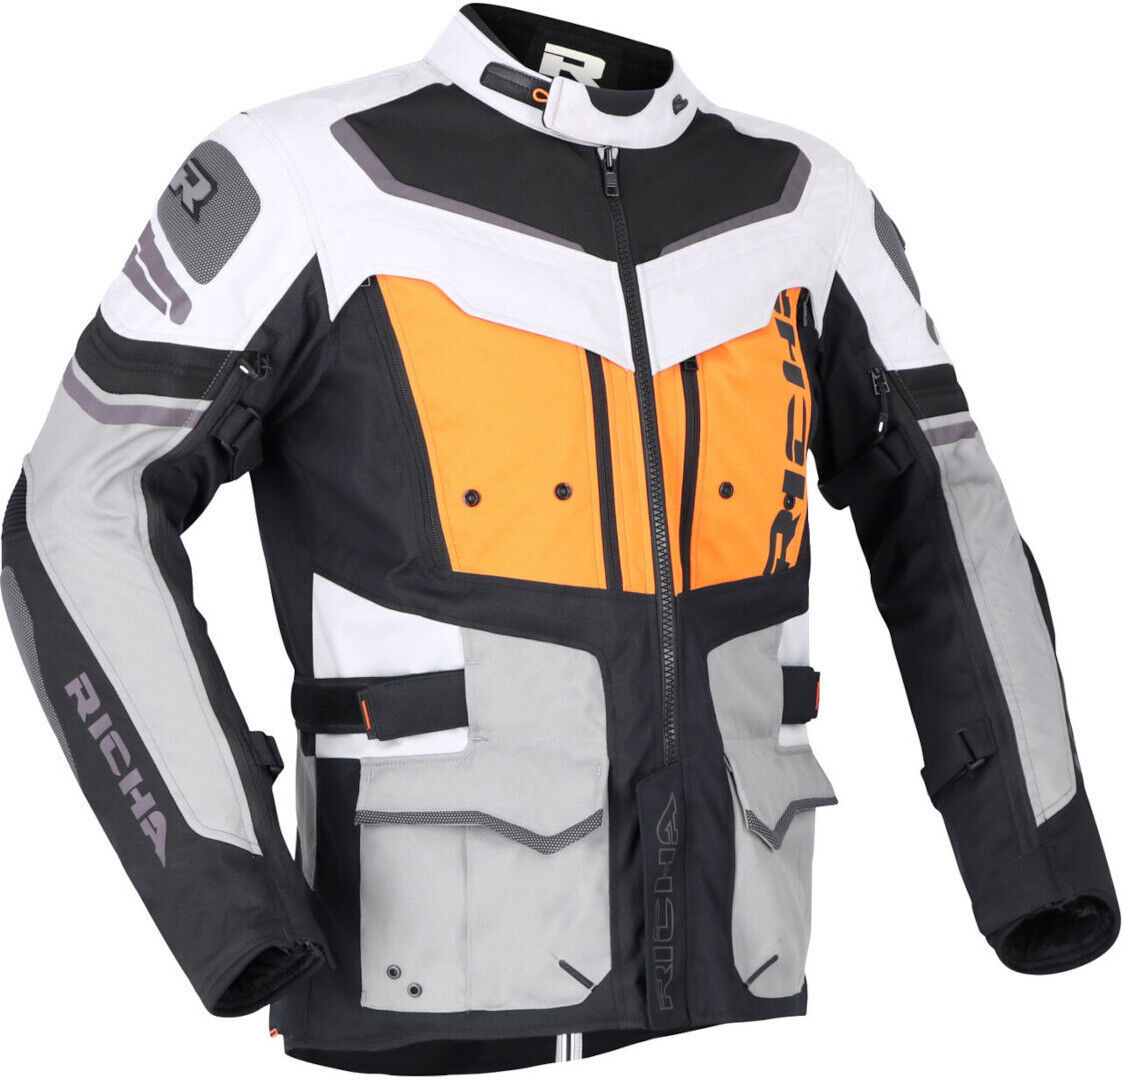 Richa Infinity 2 Adventure chaqueta textil impermeable para motocicleta - Negro Gris Naranja (4XL)